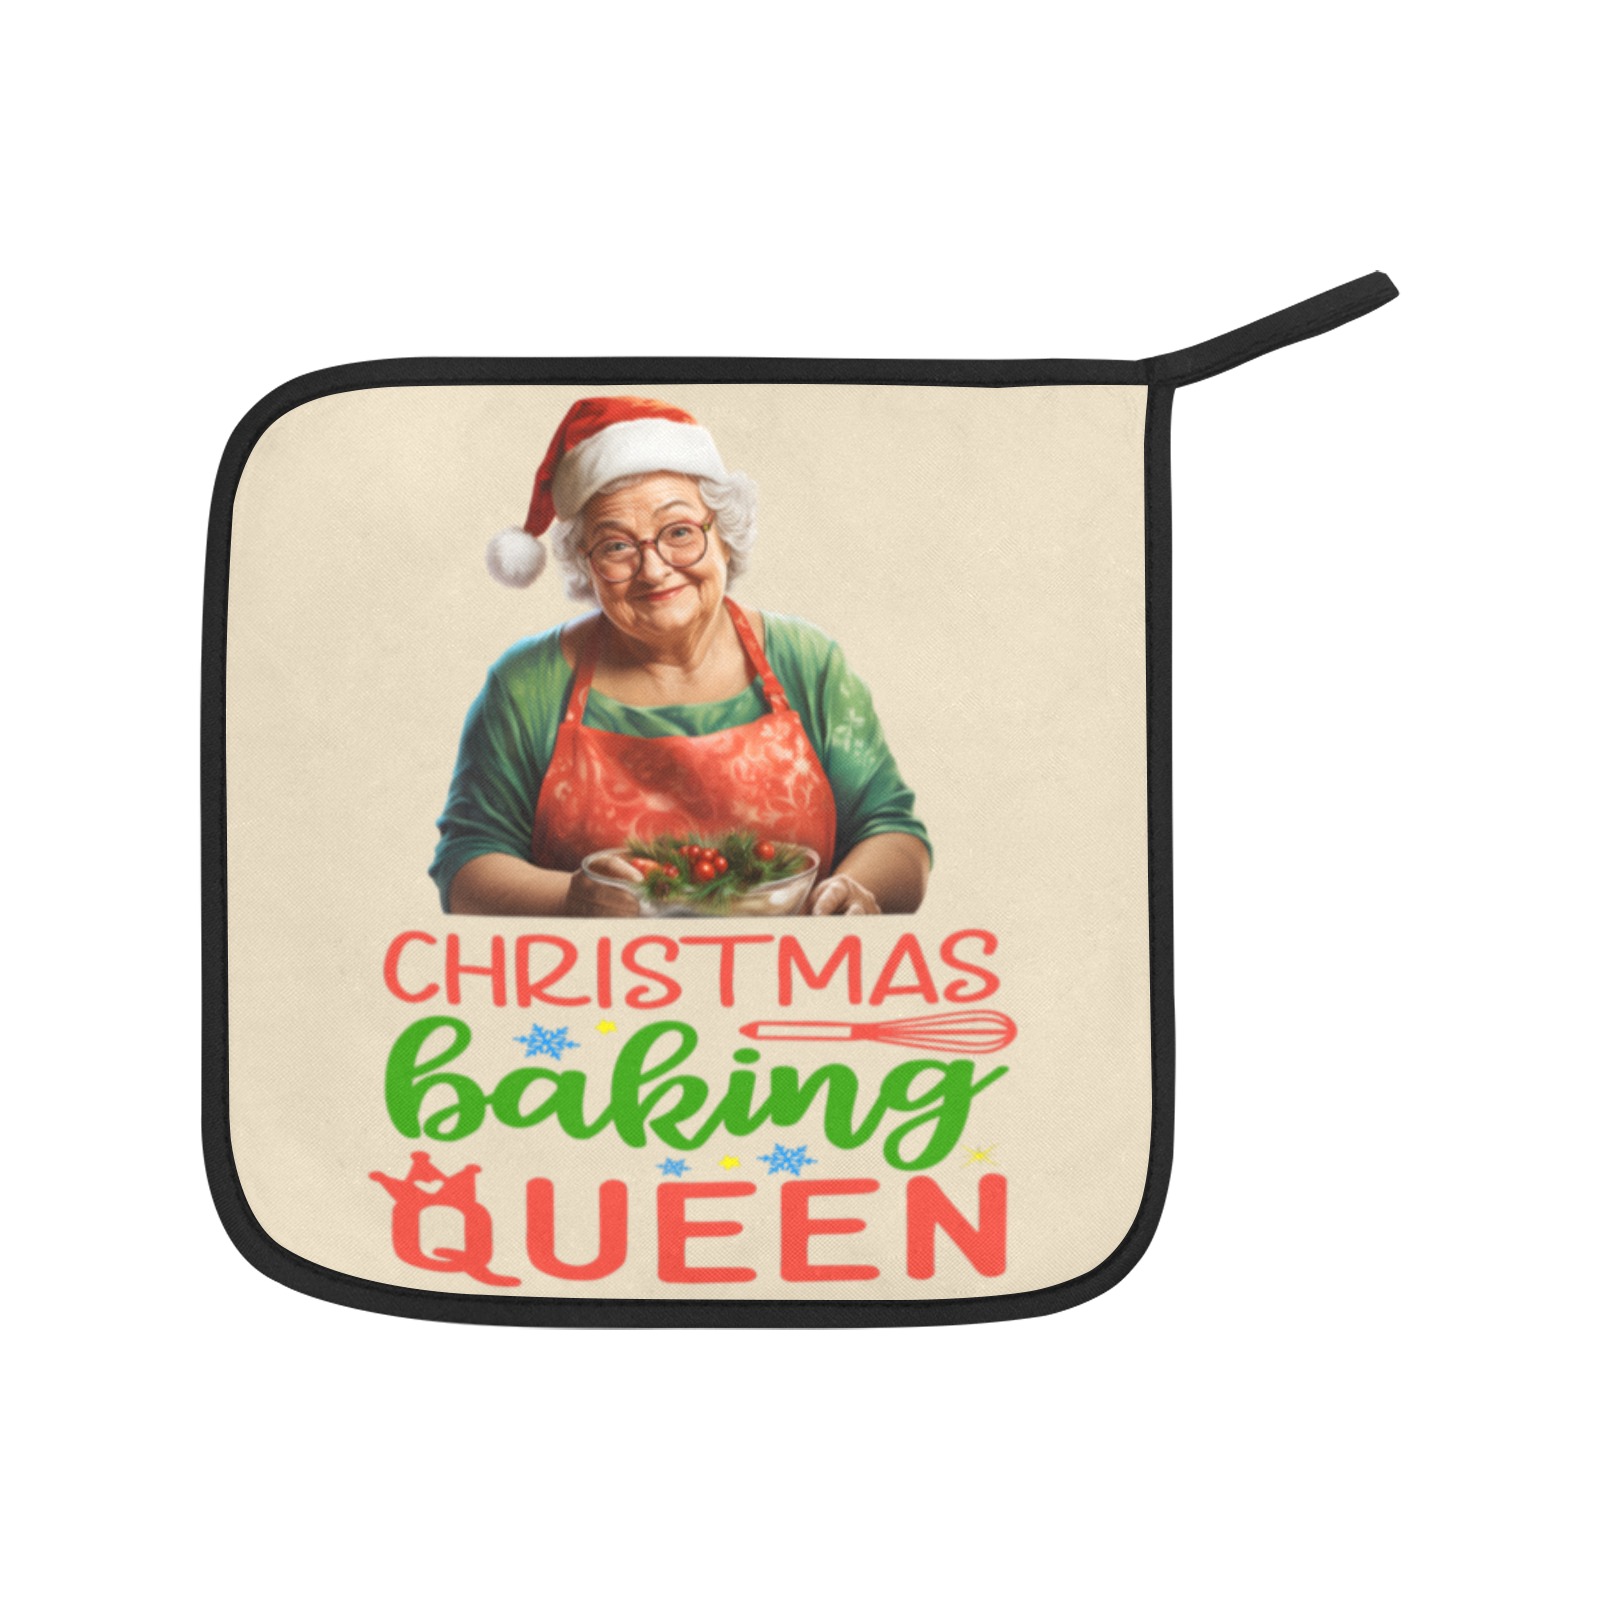 Grandma Christmas Baking Queen Oven Mitt & Pot Holder